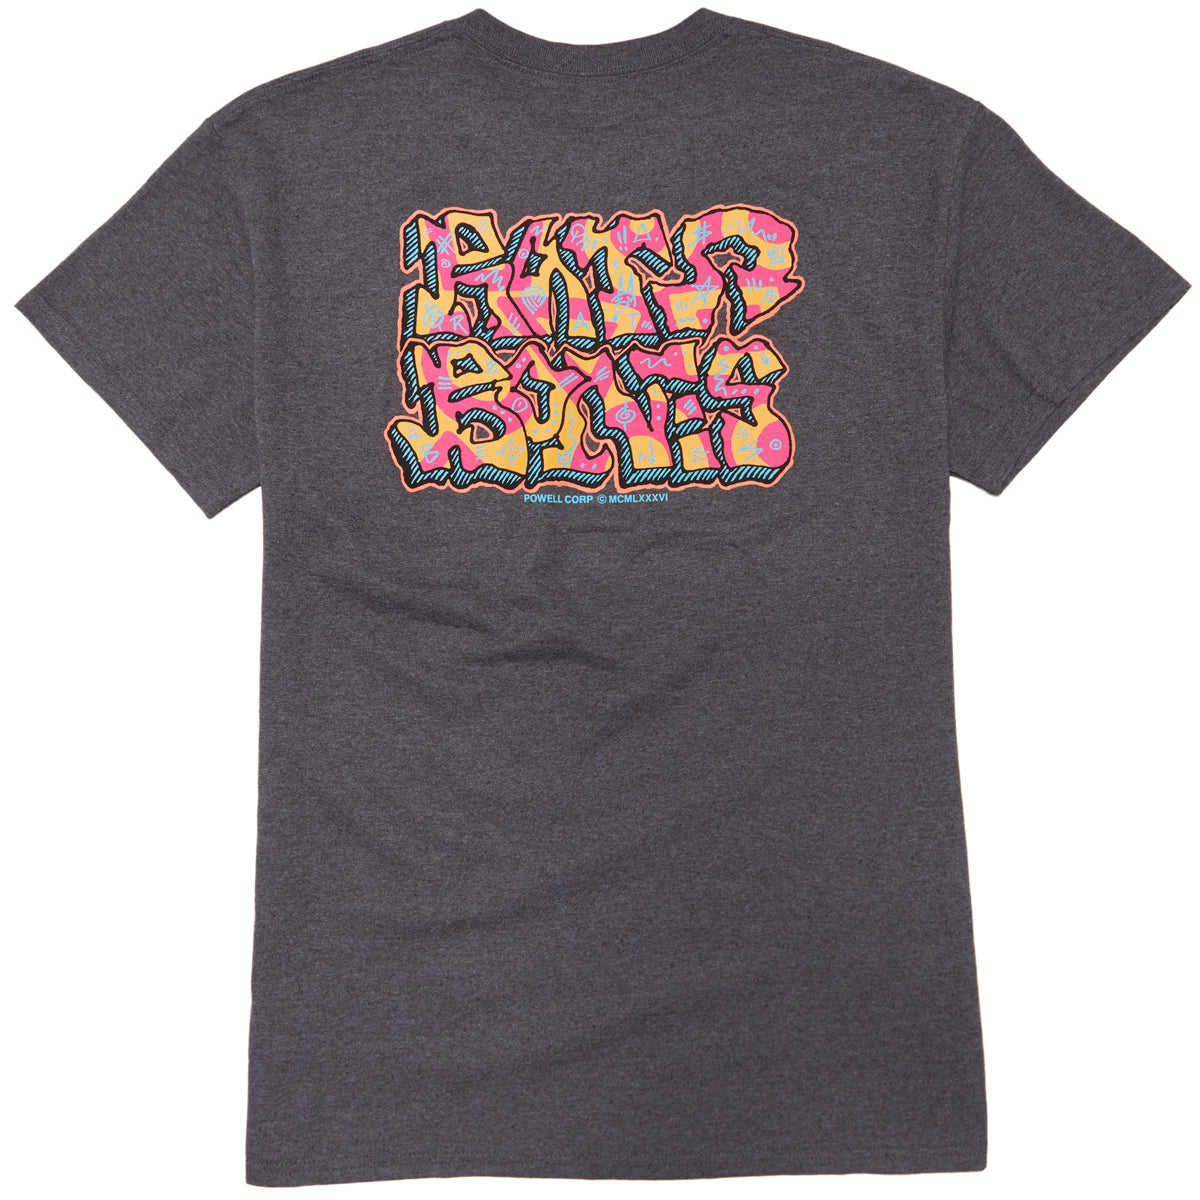 Powell-Peralta Rat Bones Graffiti T-Shirt - Tweed image 1